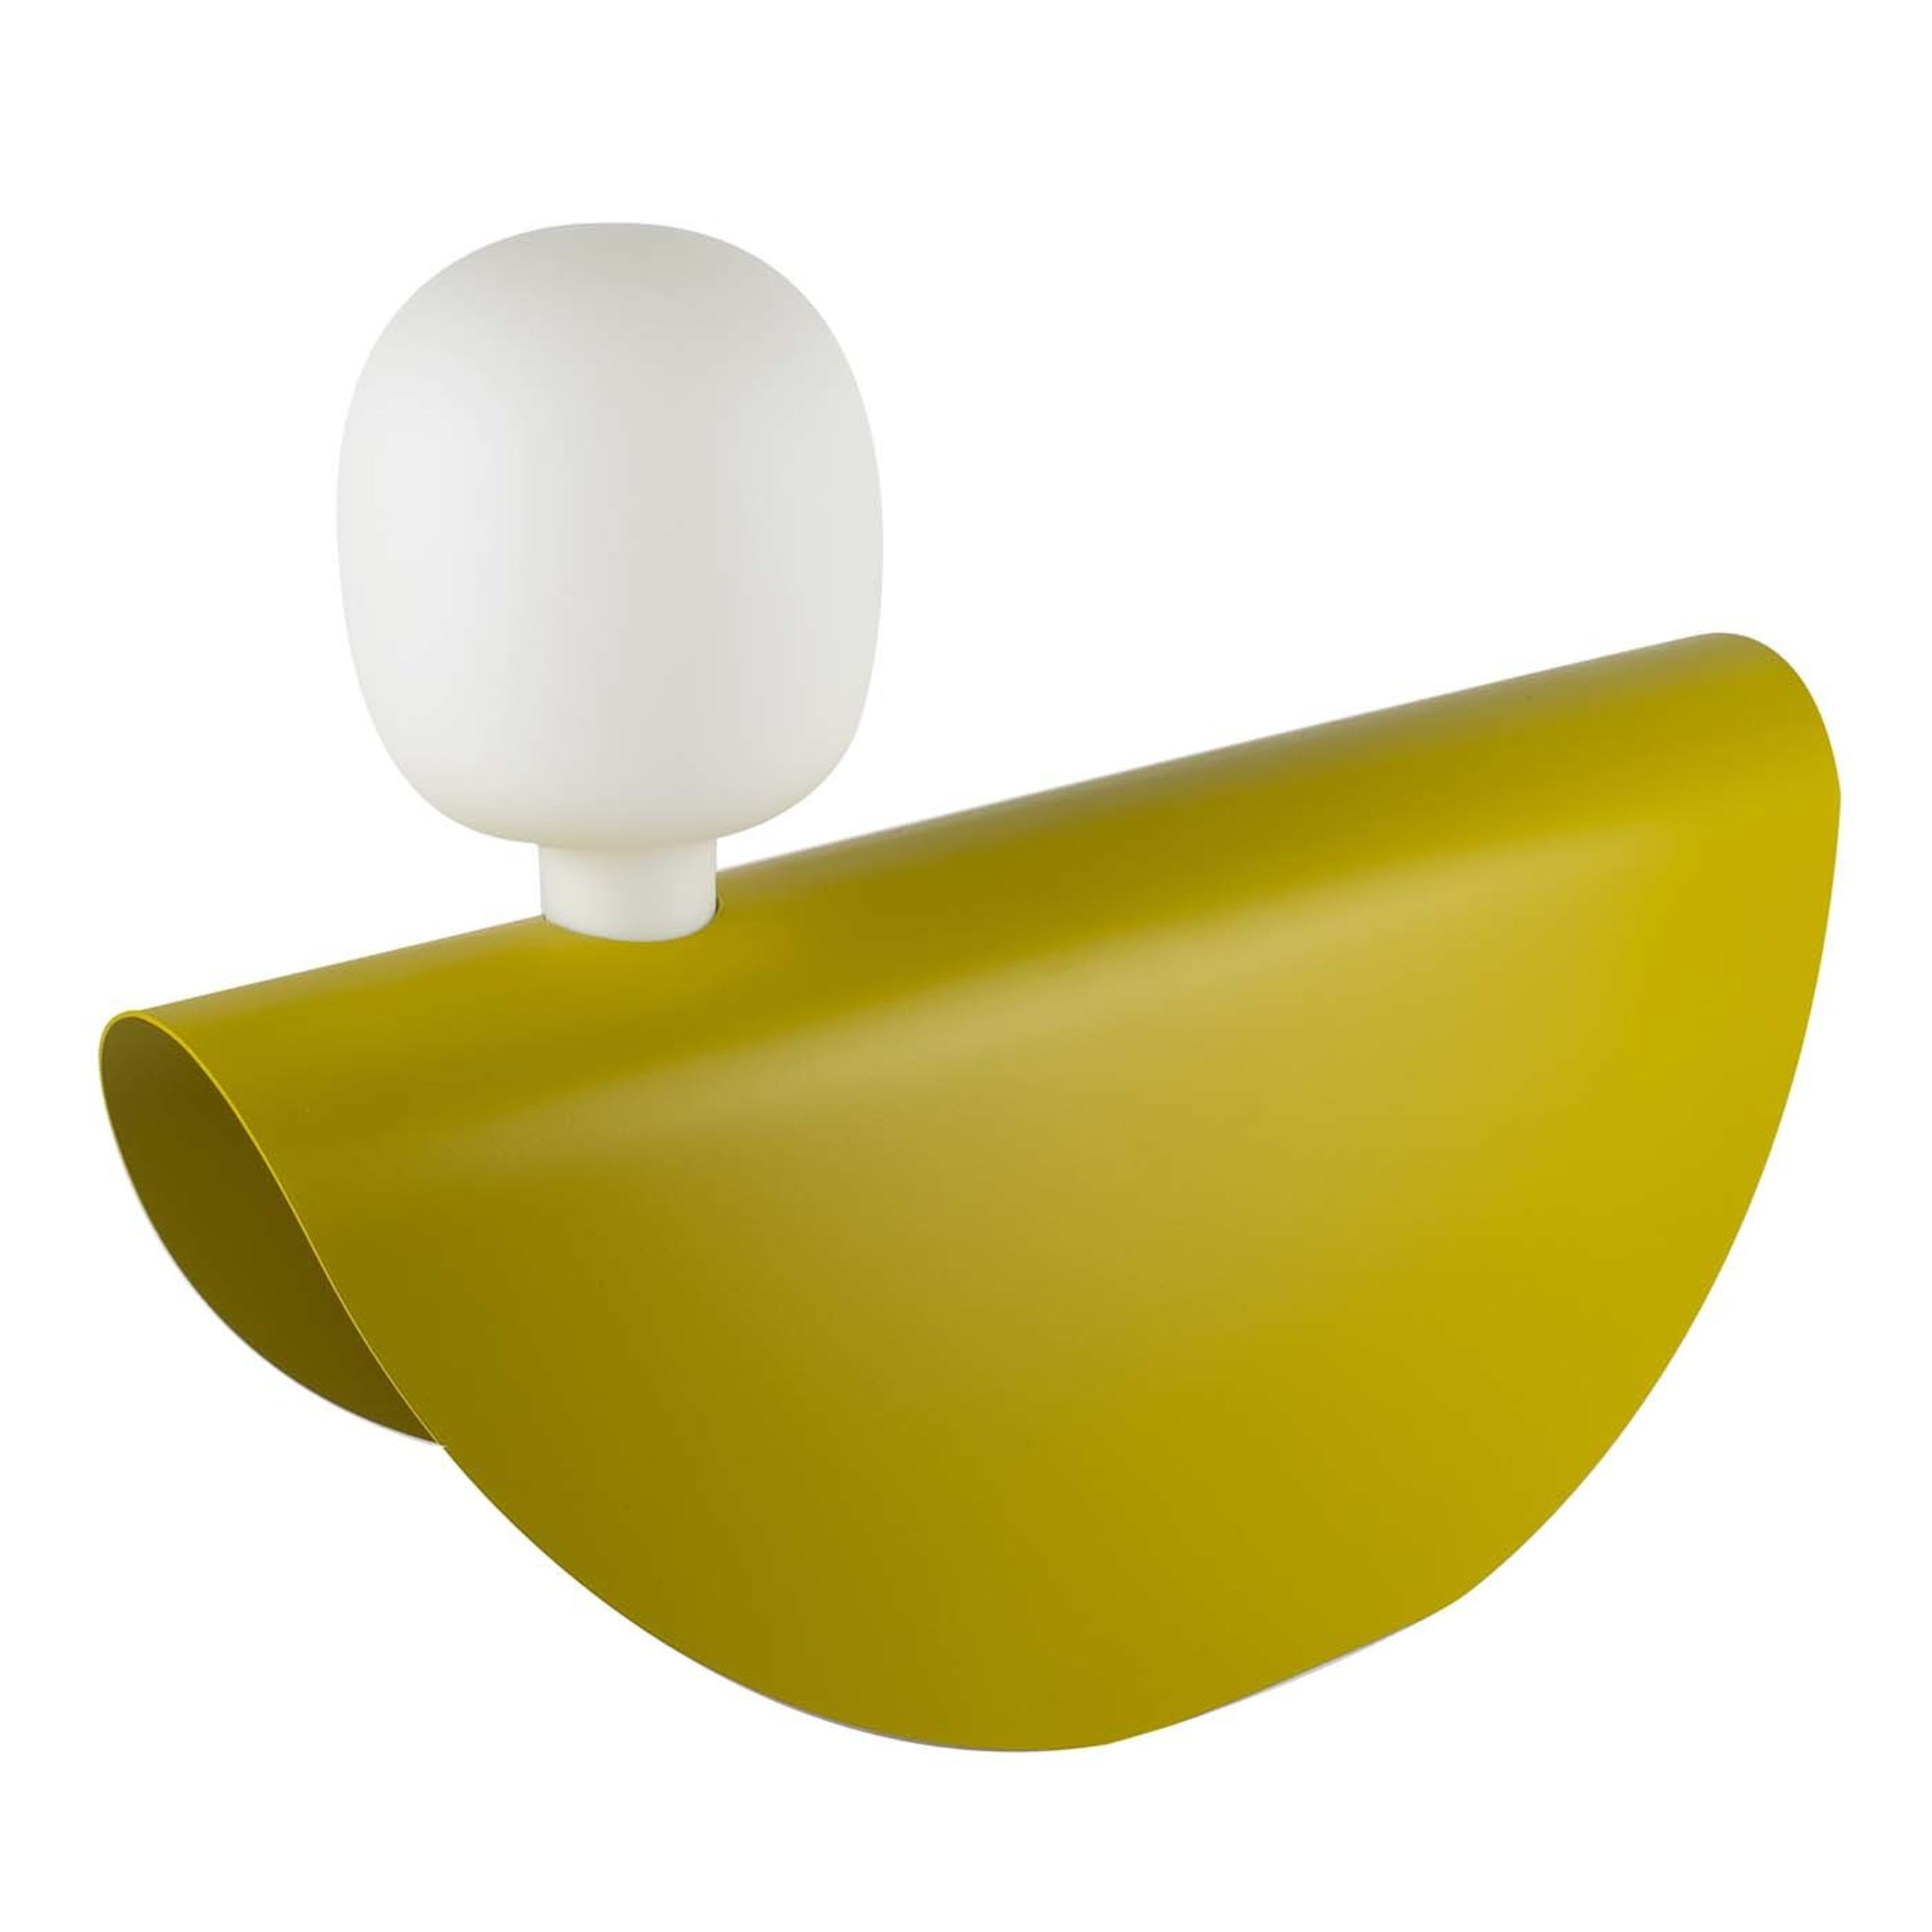 Lampe jaune plissée par Alalda Design - Vue principale